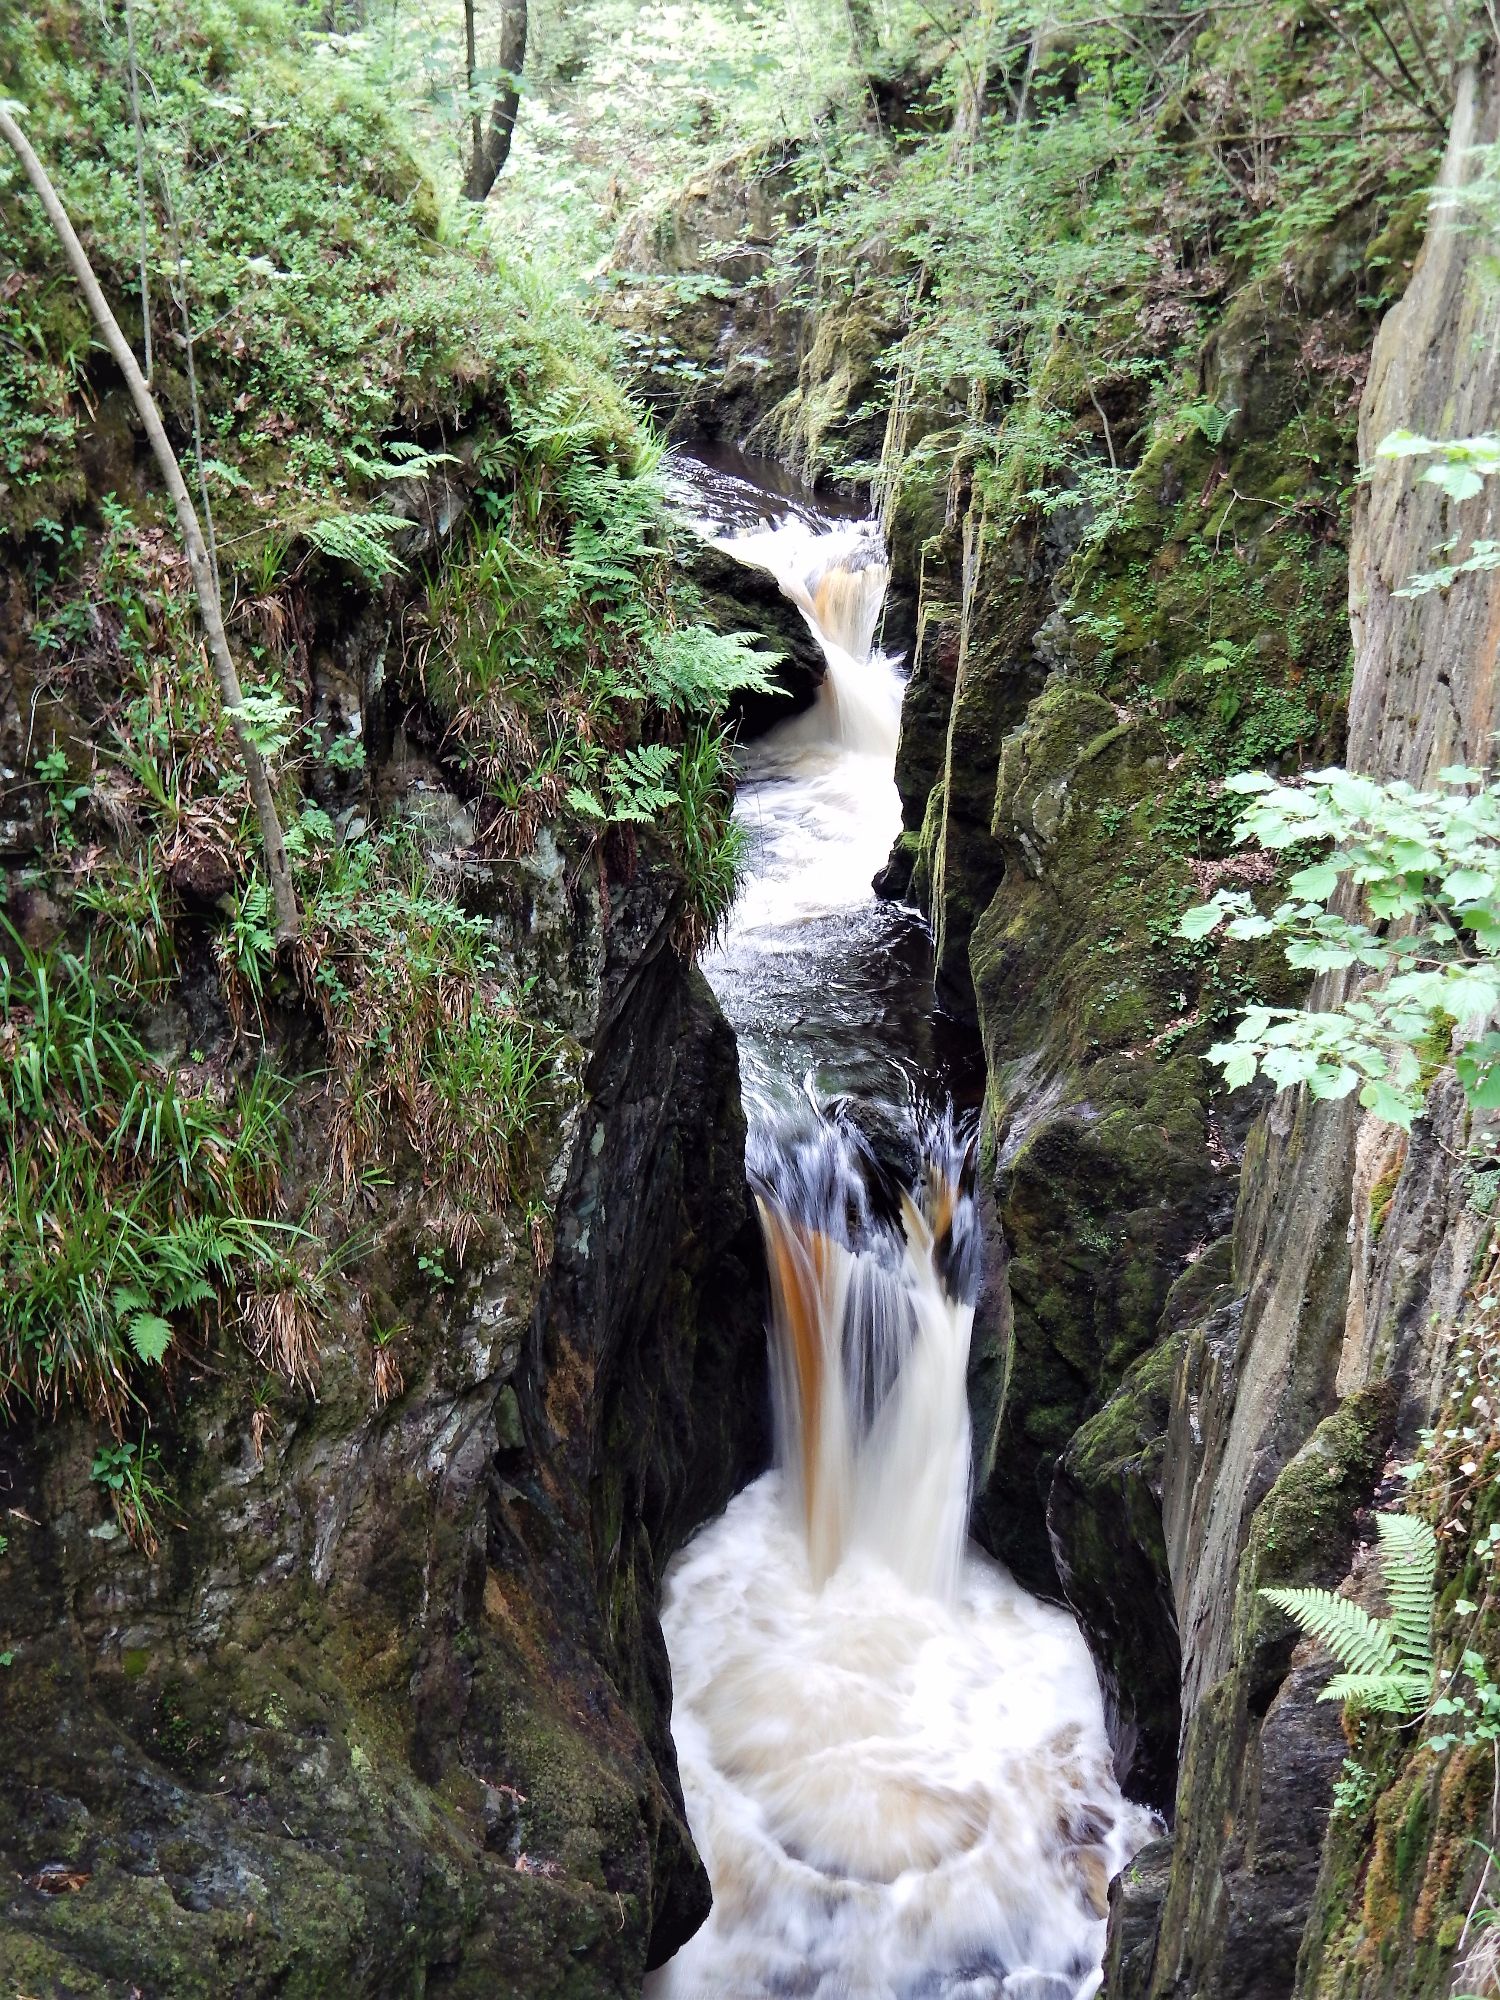 The Waterfalls Trail